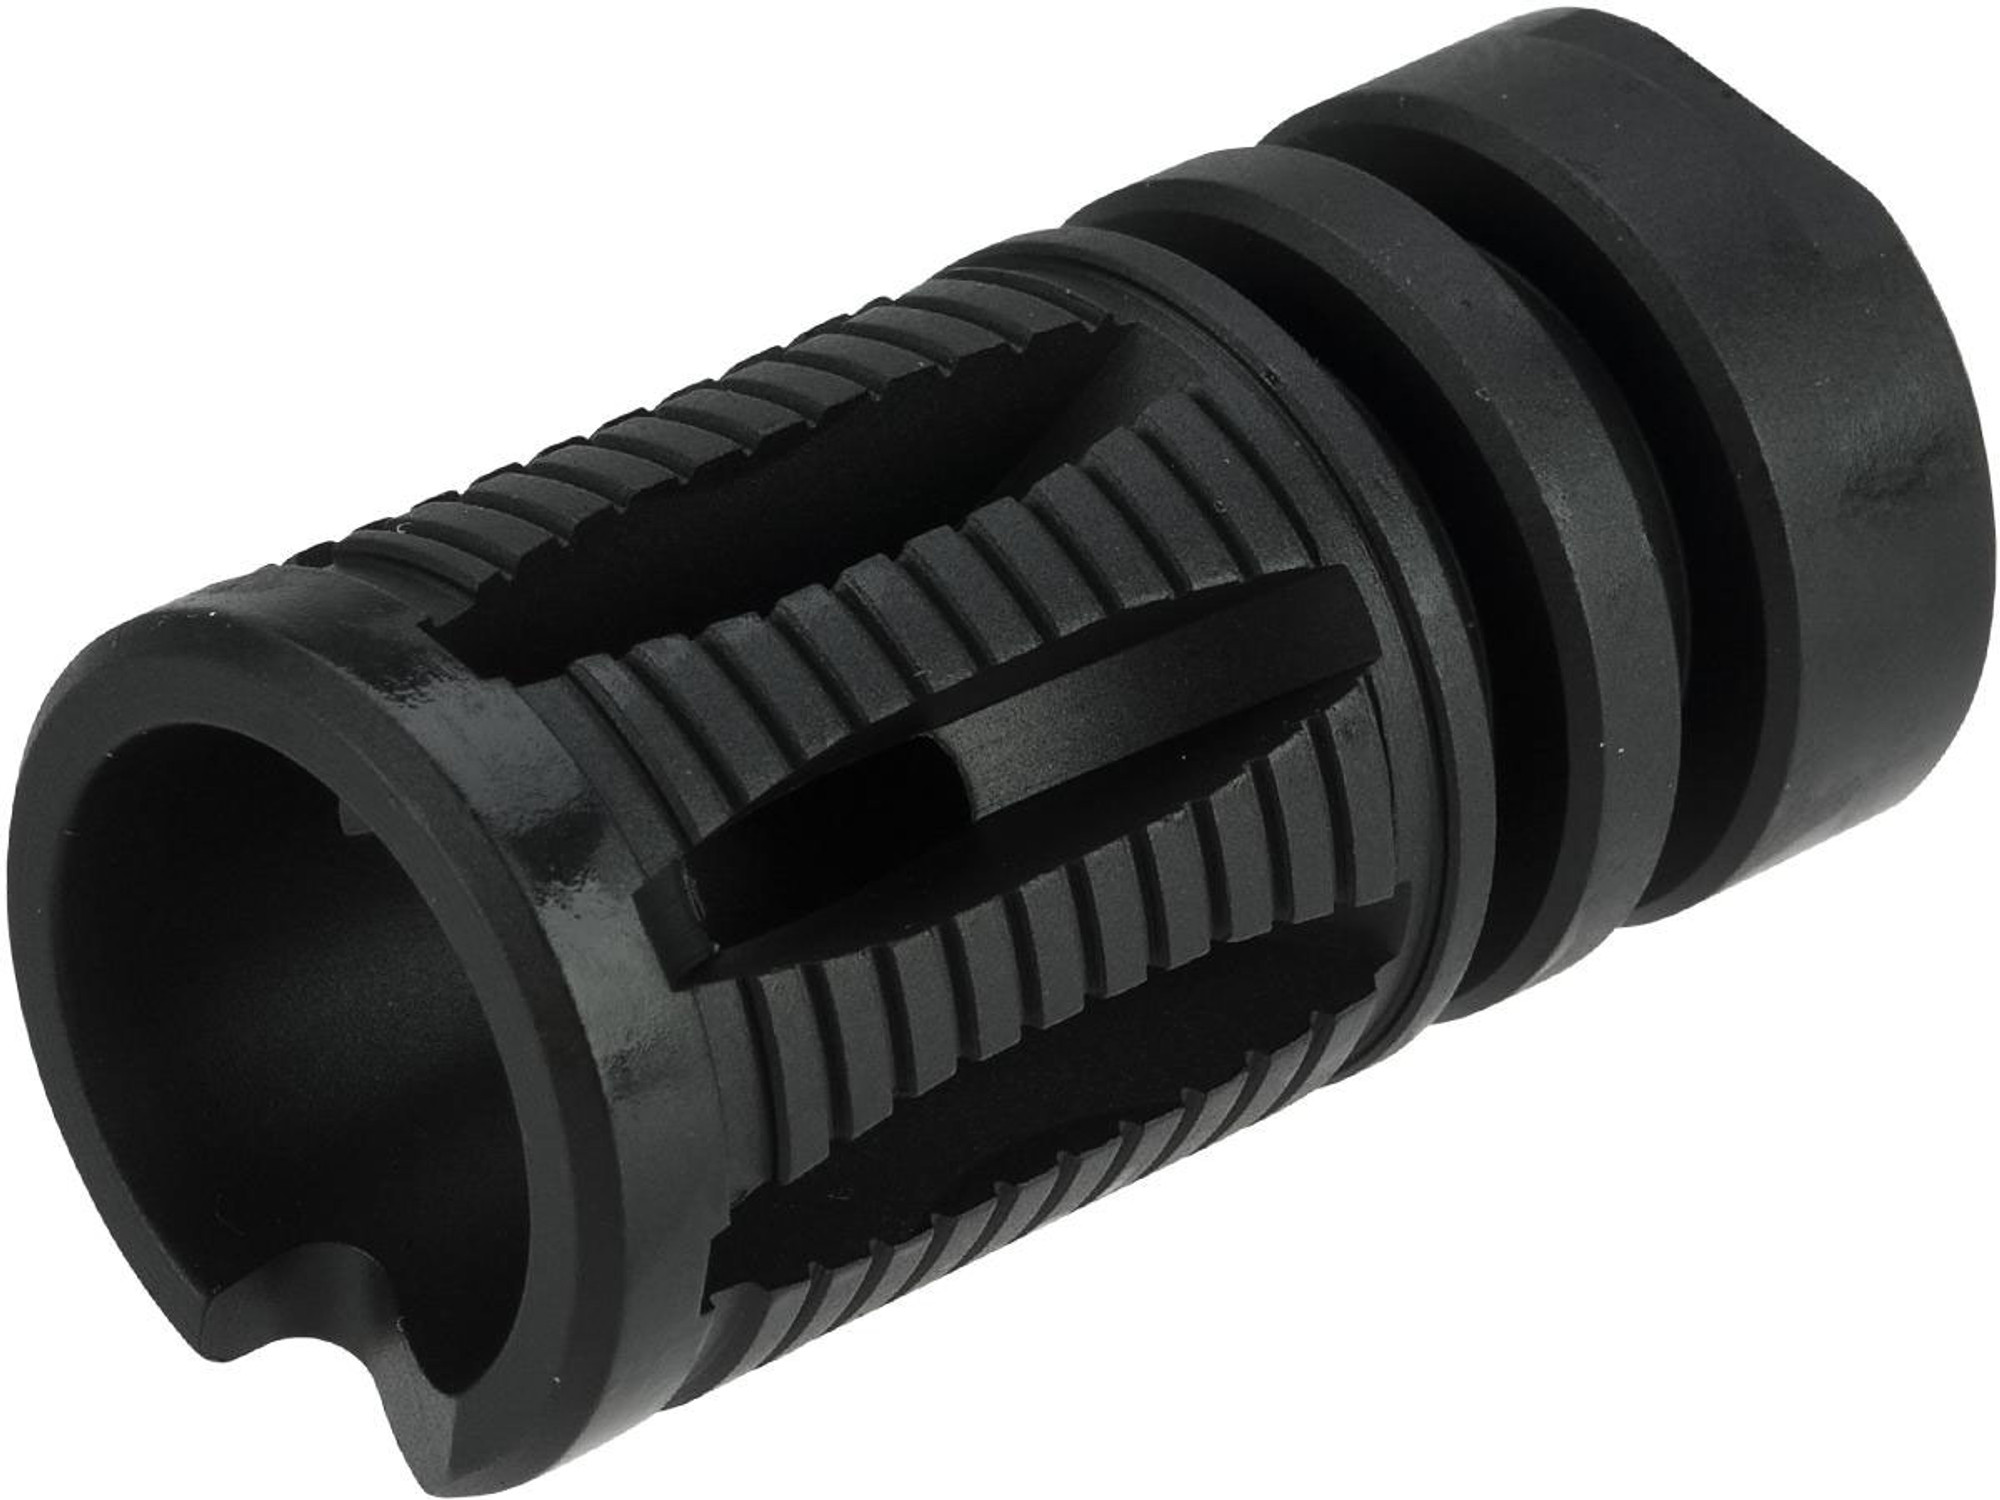 6mmProShop QD Suppressor Style Flash Hider for Airsoft Rifles (14mm Negative)